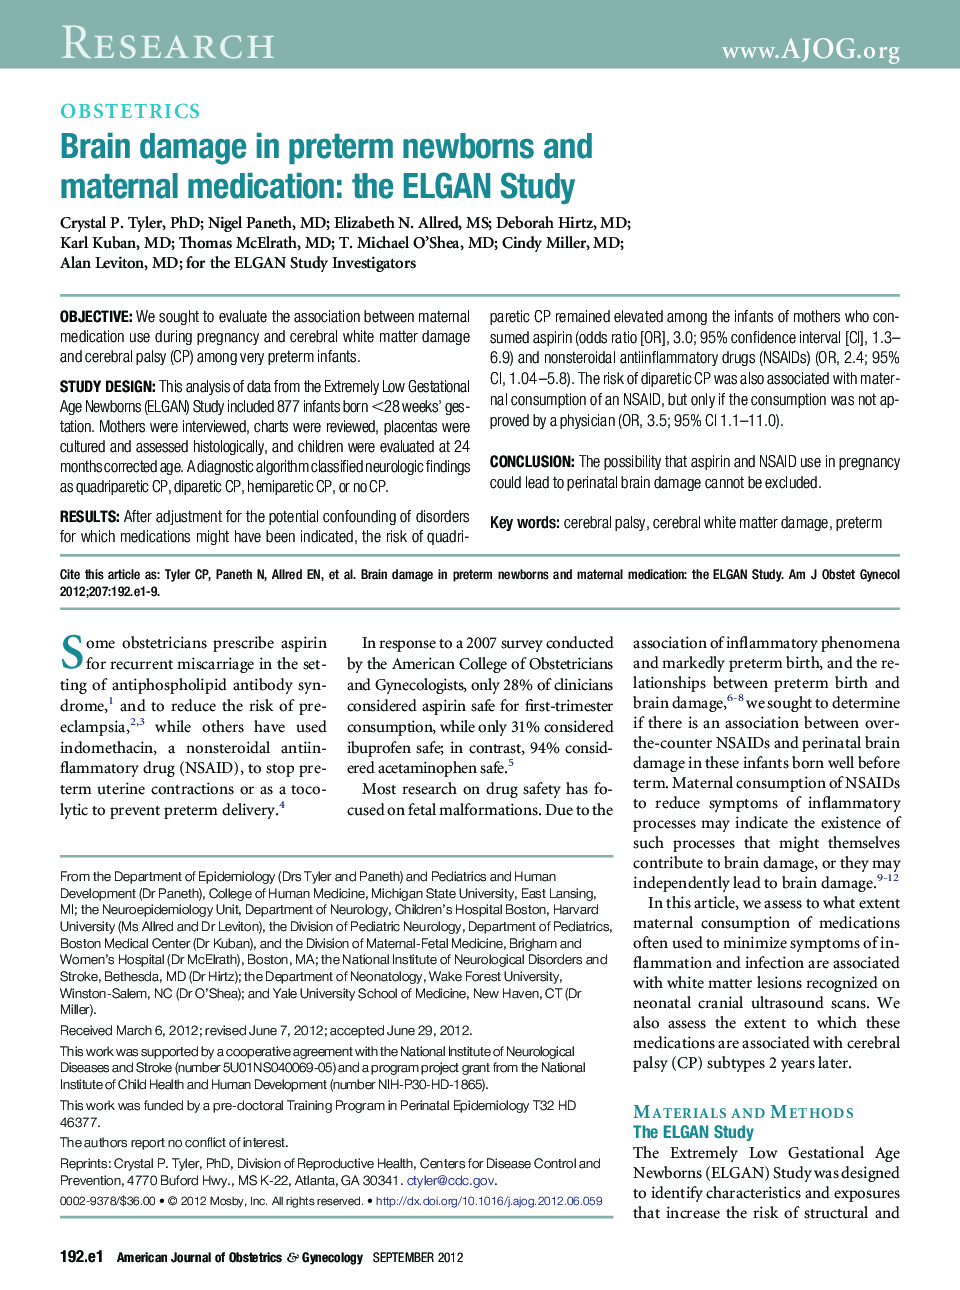 Brain damage in preterm newborns and maternal medication: the ELGAN Study